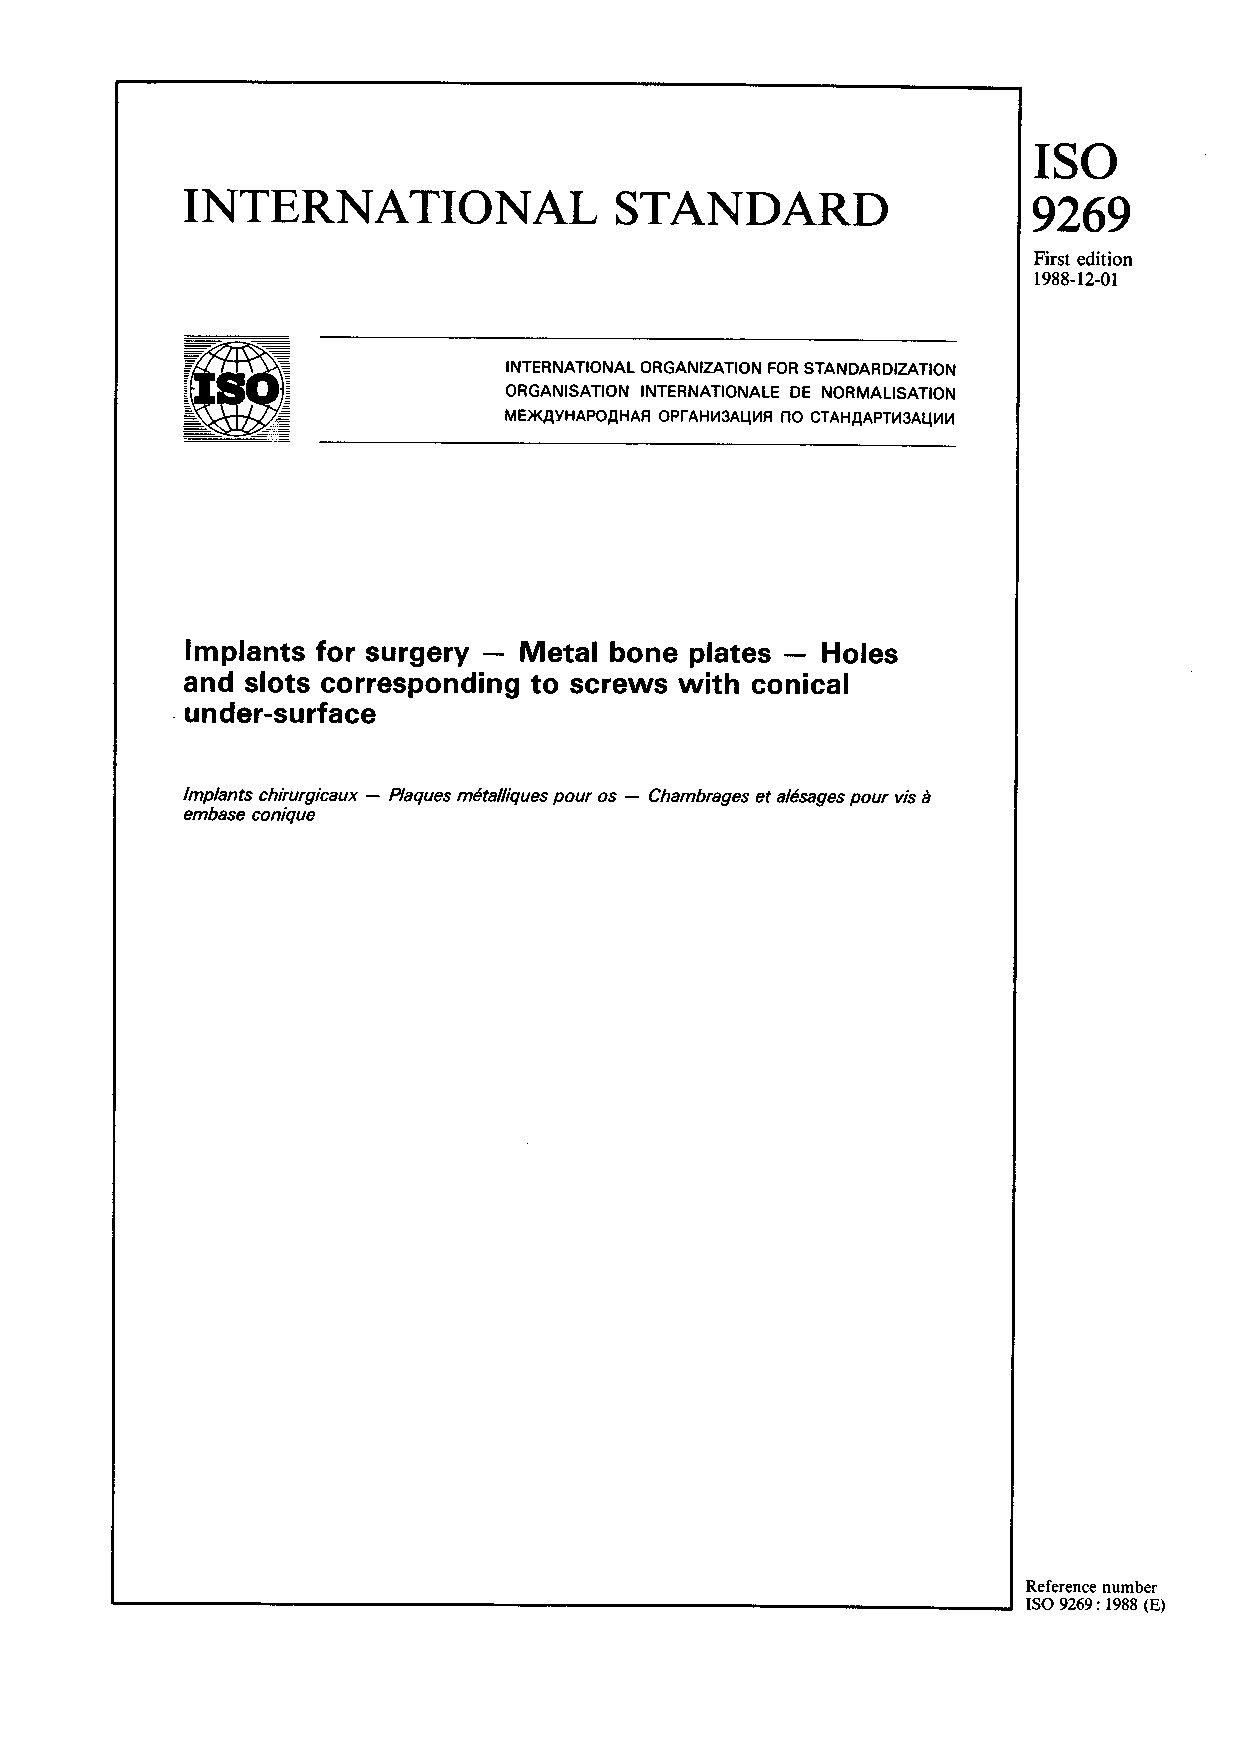 ISO 9269:1988封面图